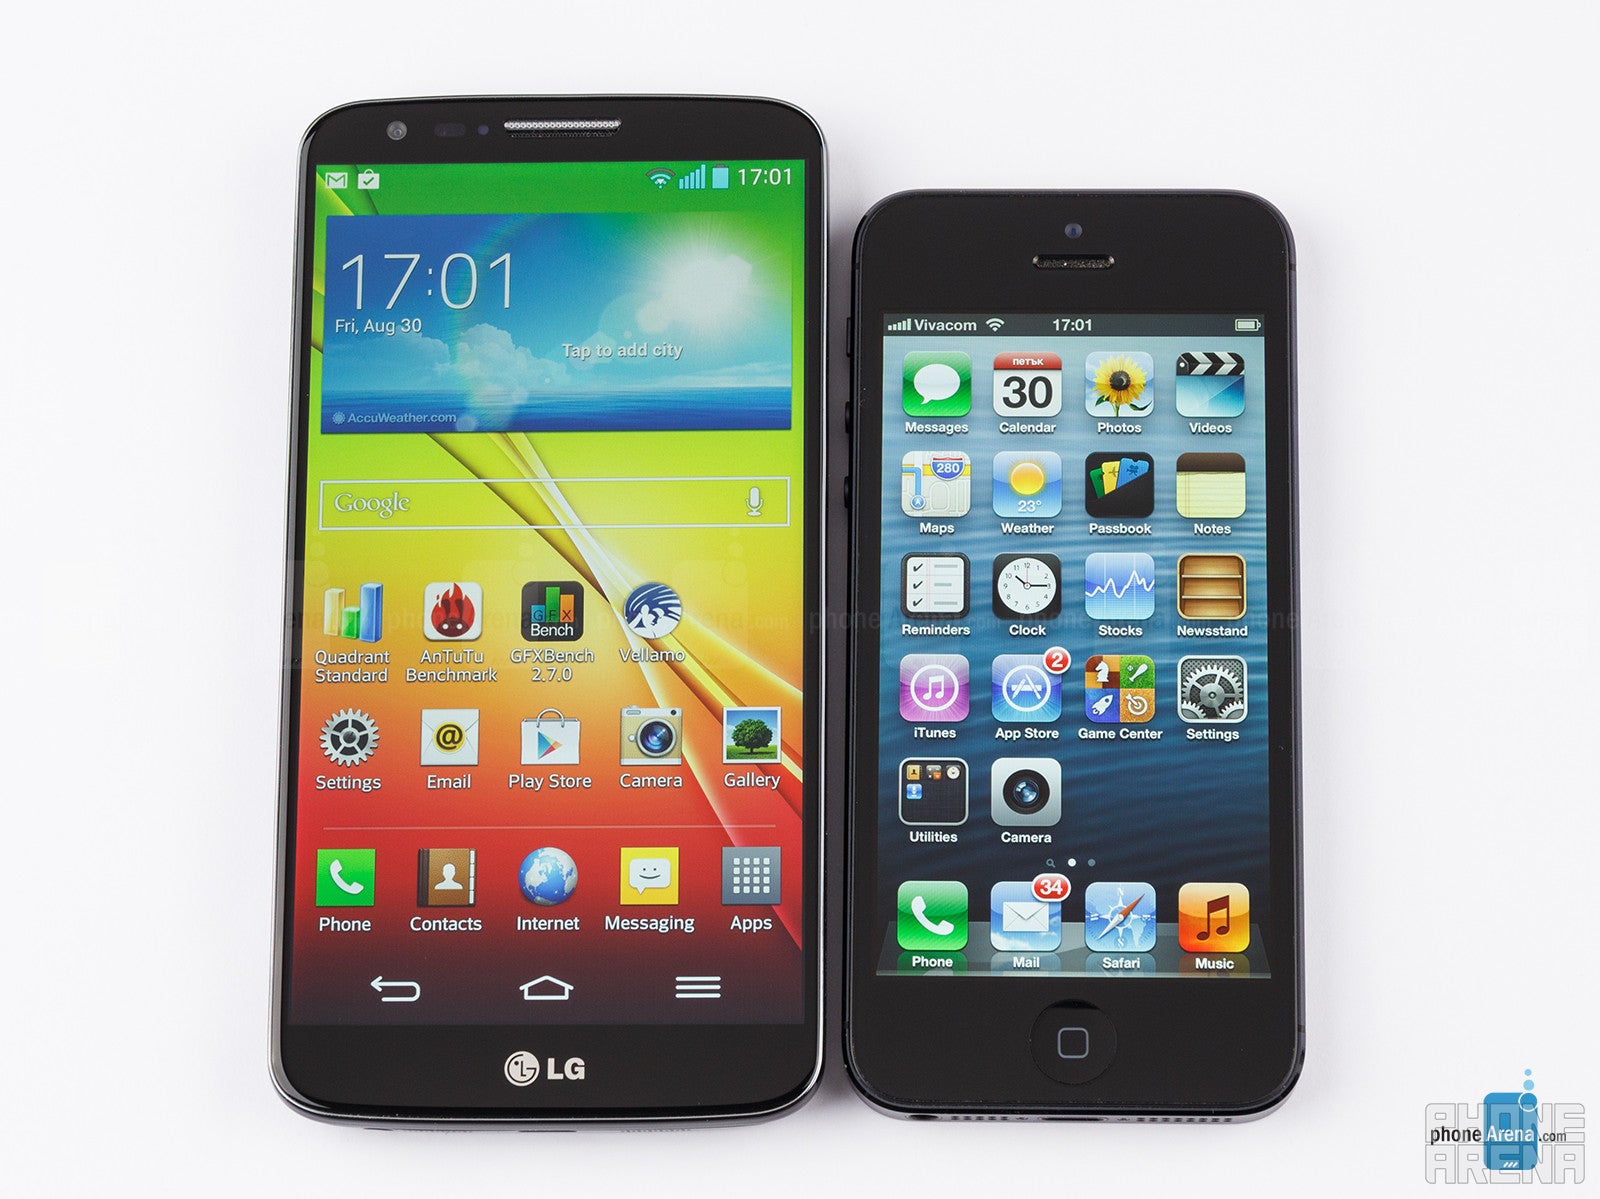 LG G2 vs Apple iPhone 5